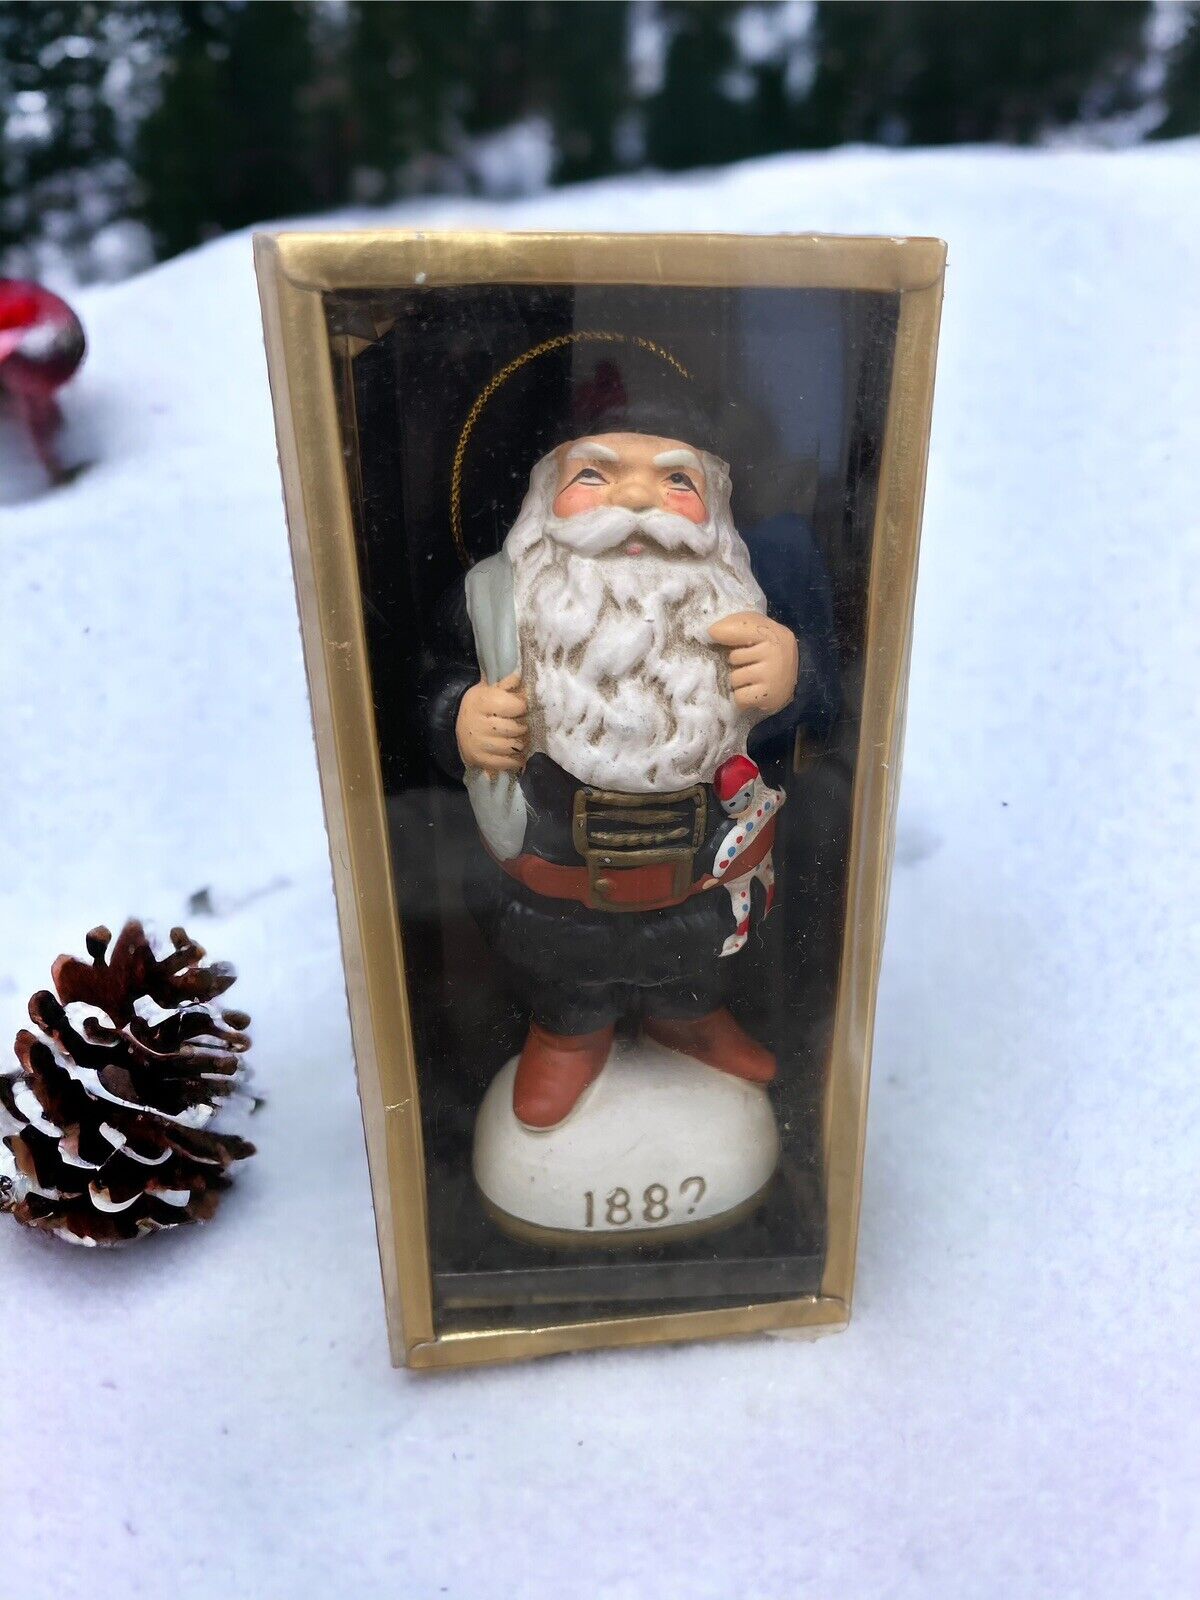 Memories Of Santa “Trojan Santa Claus” USA Circa 1887 Ornament